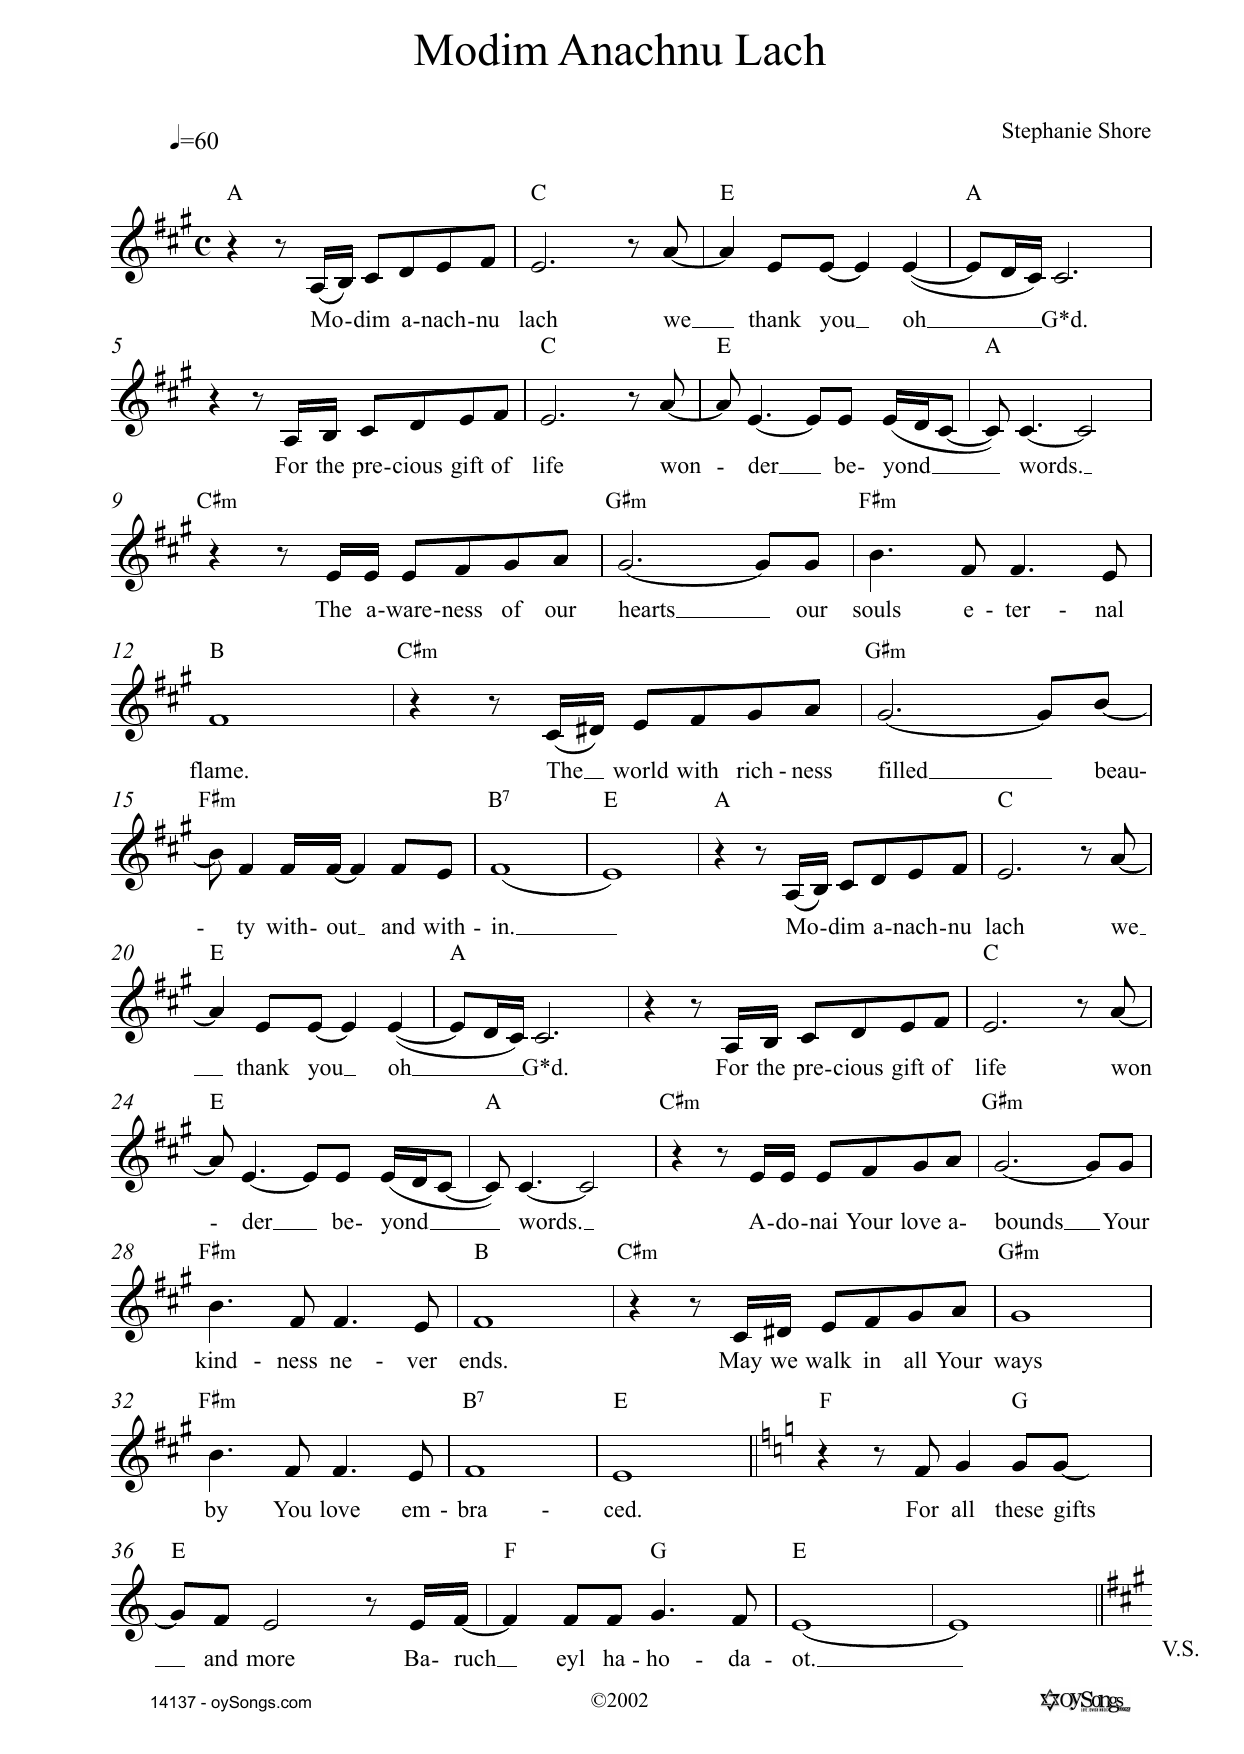 Stephanie Shore Modim Anachnu Lach Sheet Music Notes & Chords for Lead Sheet / Fake Book - Download or Print PDF